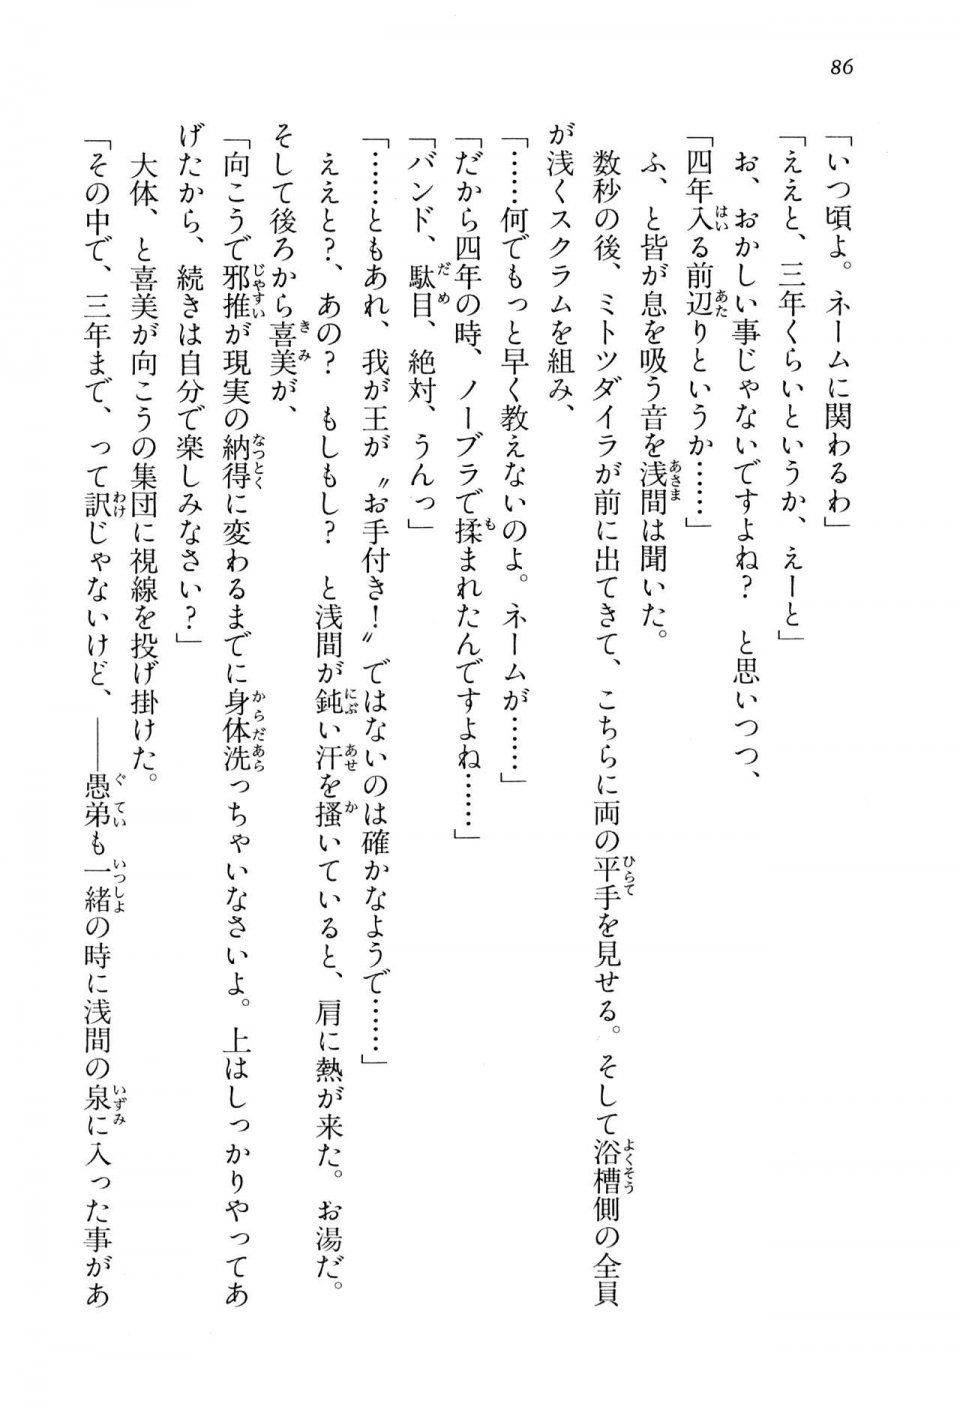 Kyoukai Senjou no Horizon BD Special Mininovel Vol 3(2A) - Photo #90